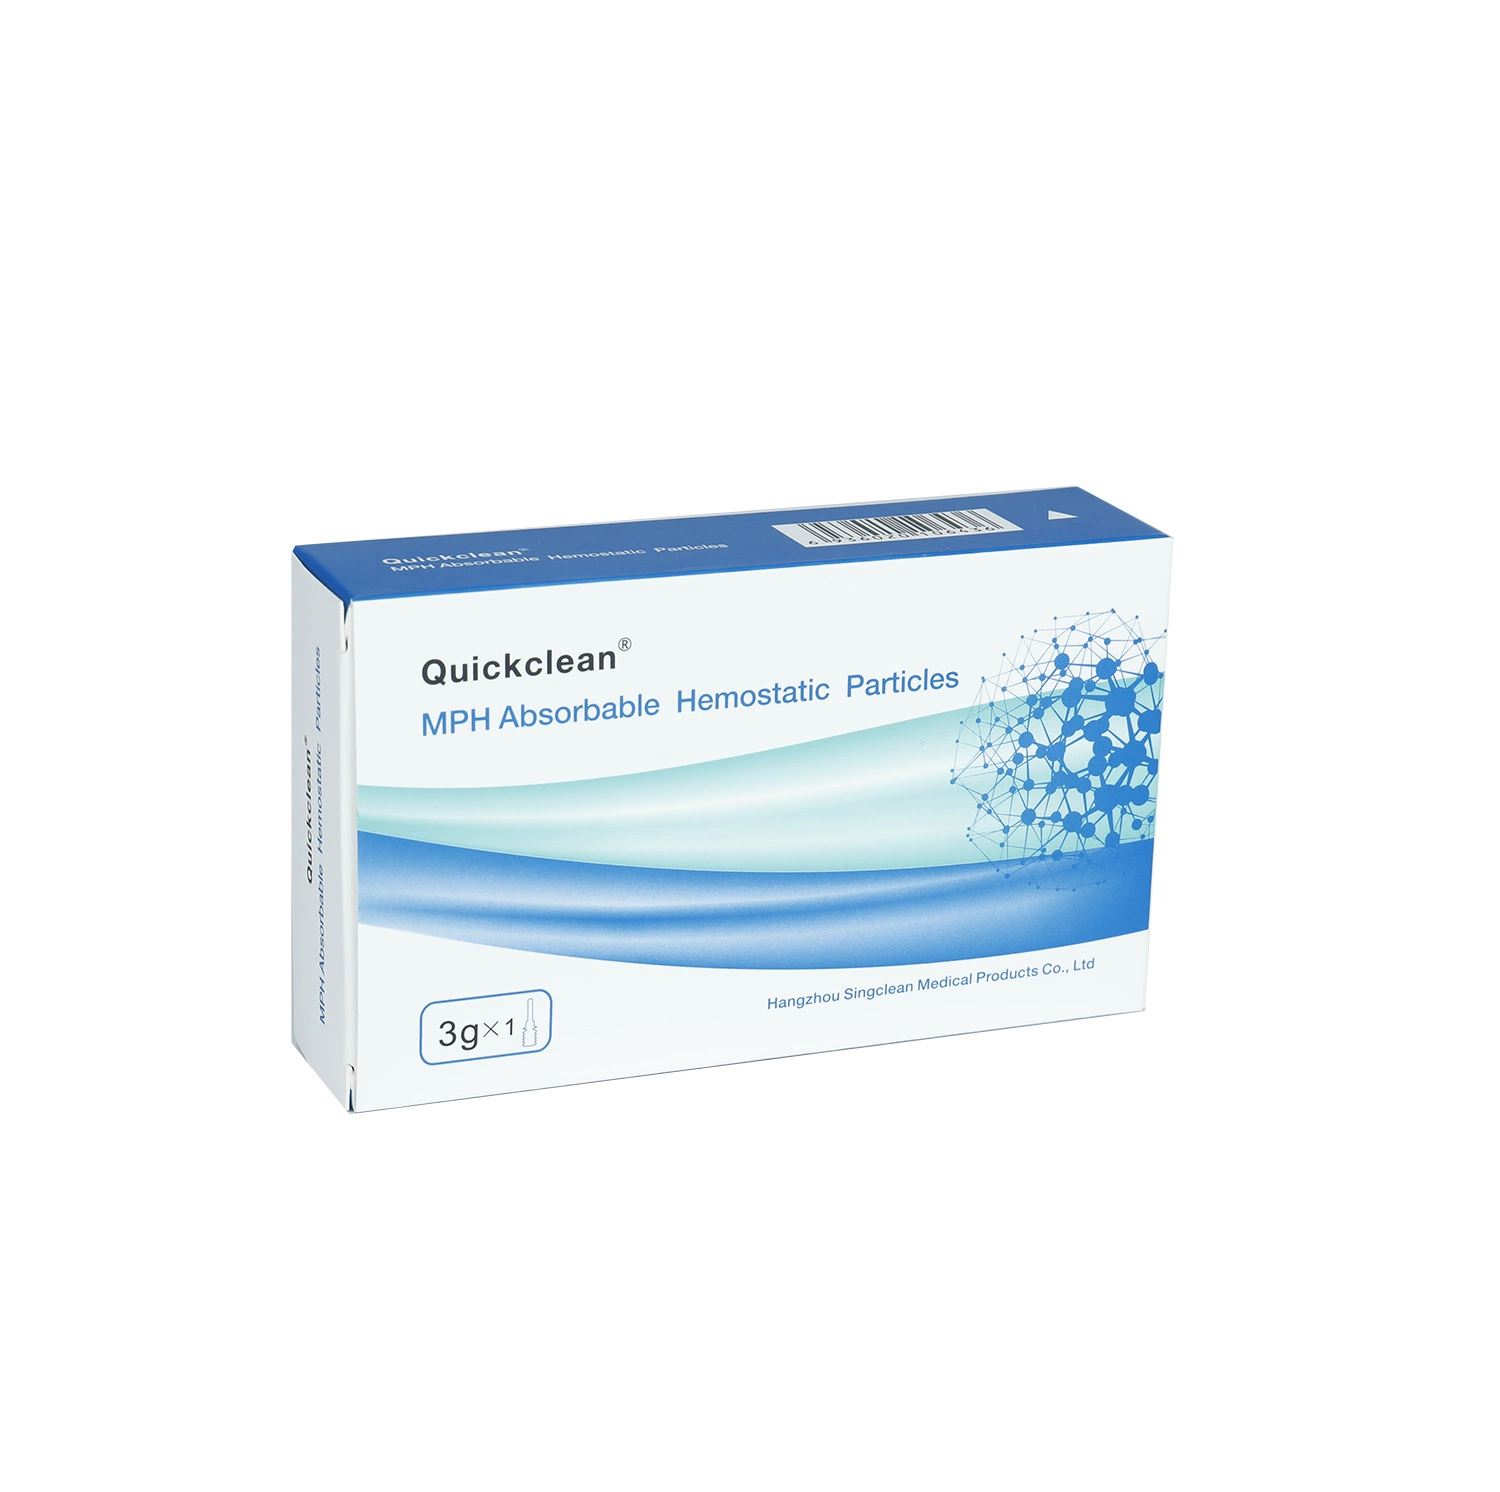 Carton Box, Blister Card in Gift Box Endoscopy Hemostatic Product